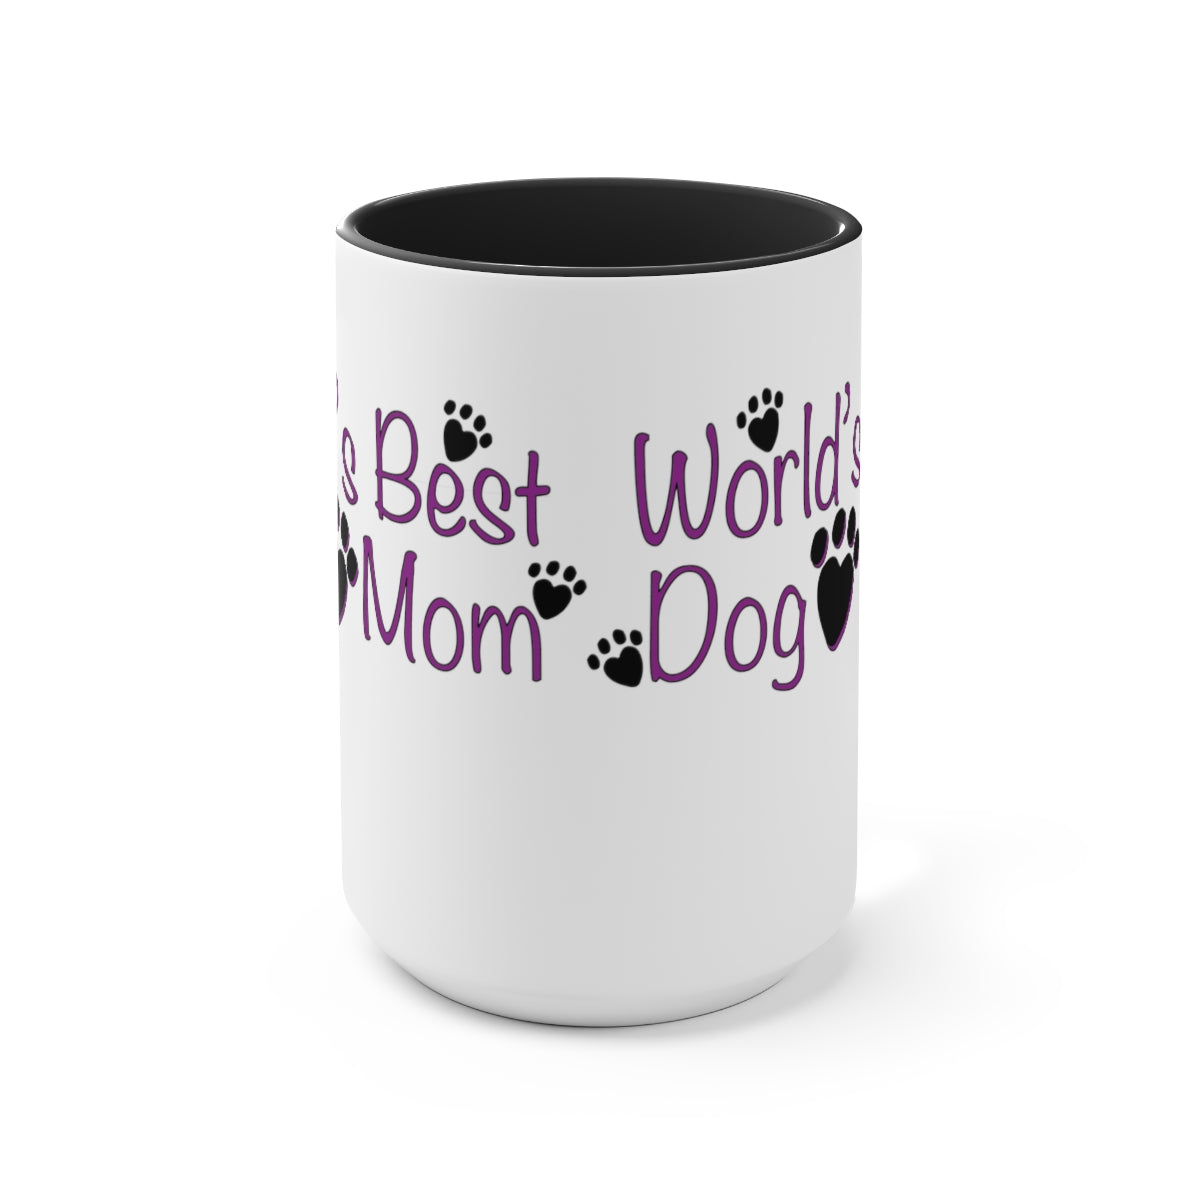 Worlds Best Dog Mom Accent Mug